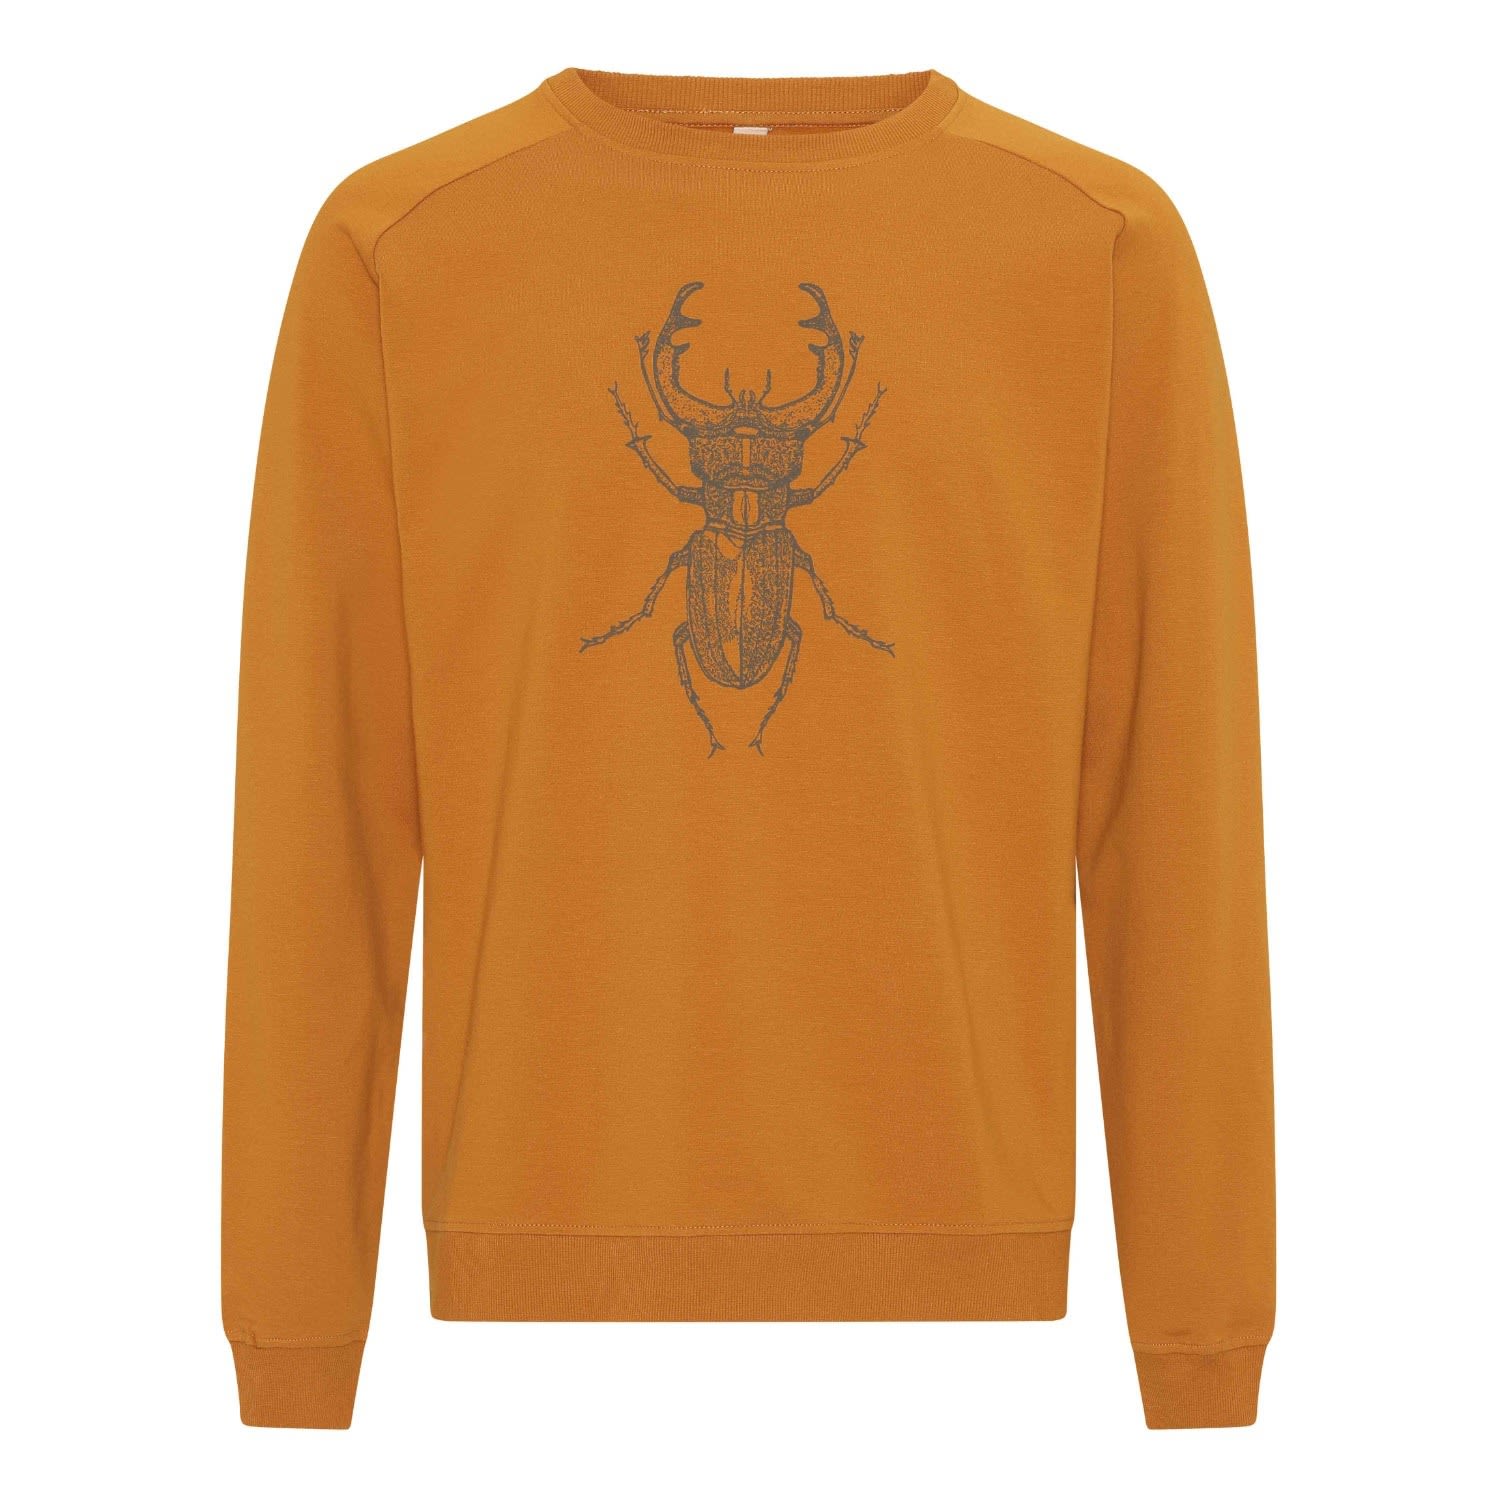 Men's Yellow / Orange The Organic Sweatshirt - Stag Beetle. Small GROBUND